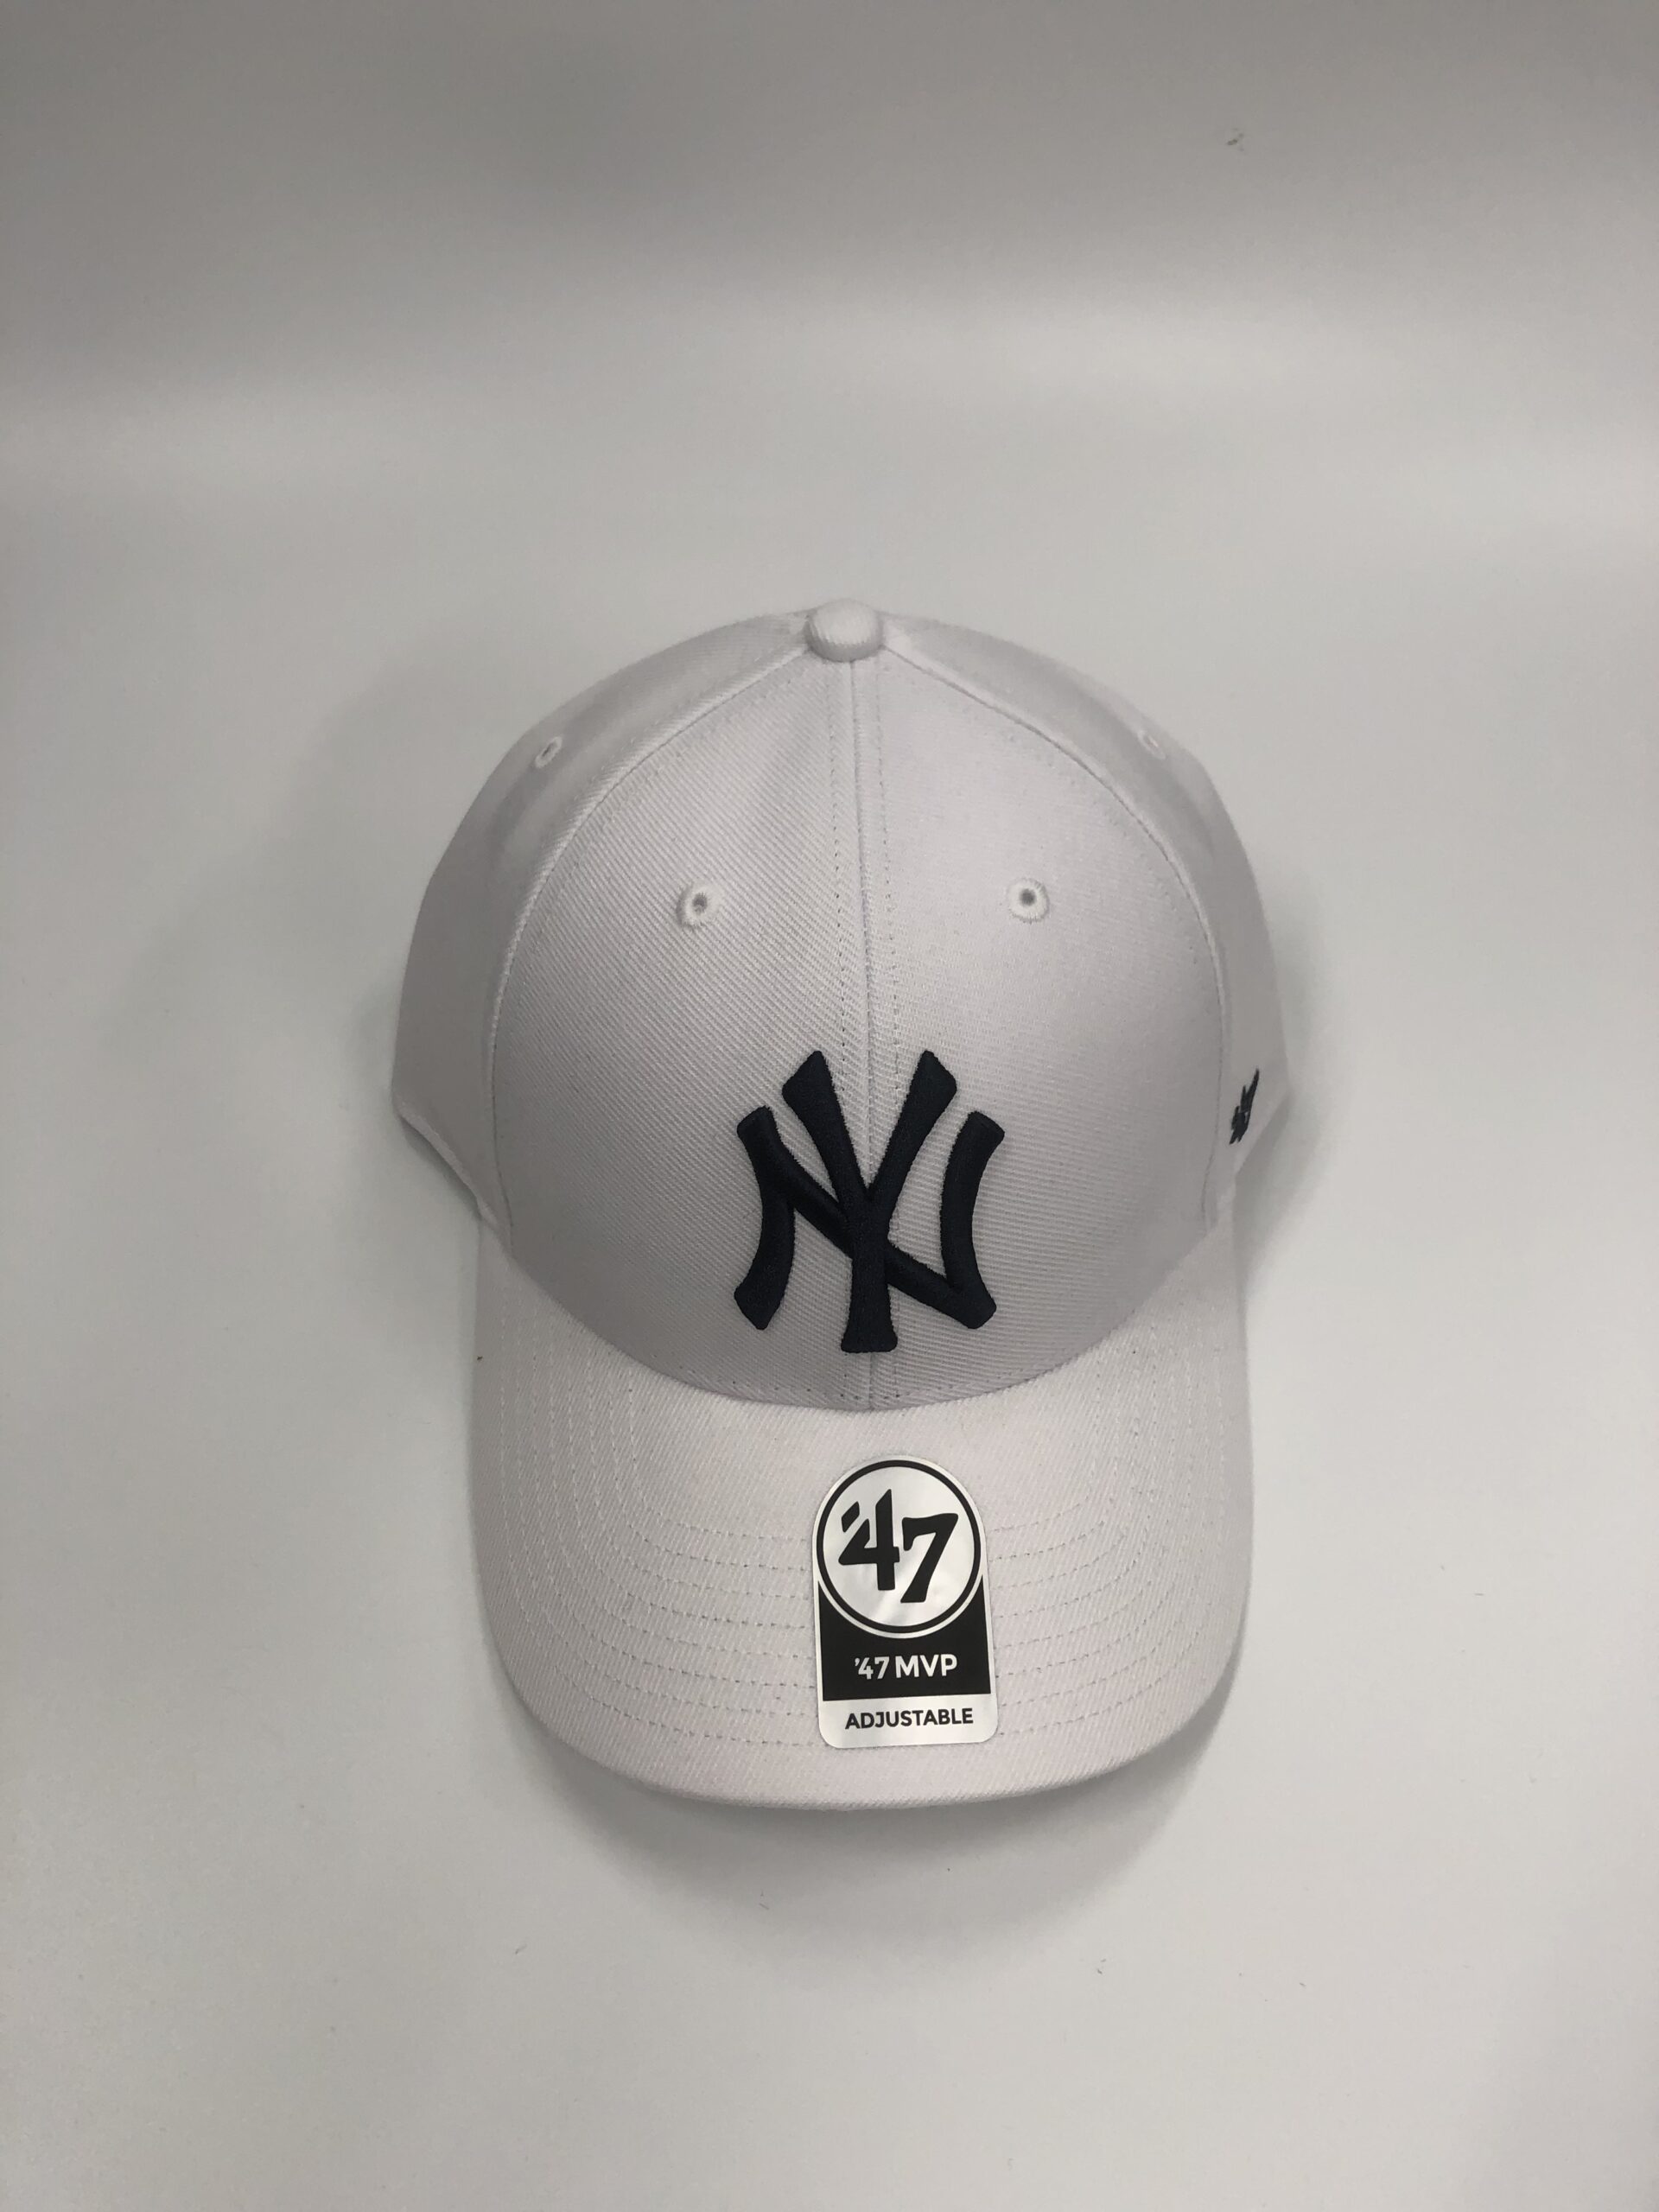 Yankees’47 MVP White